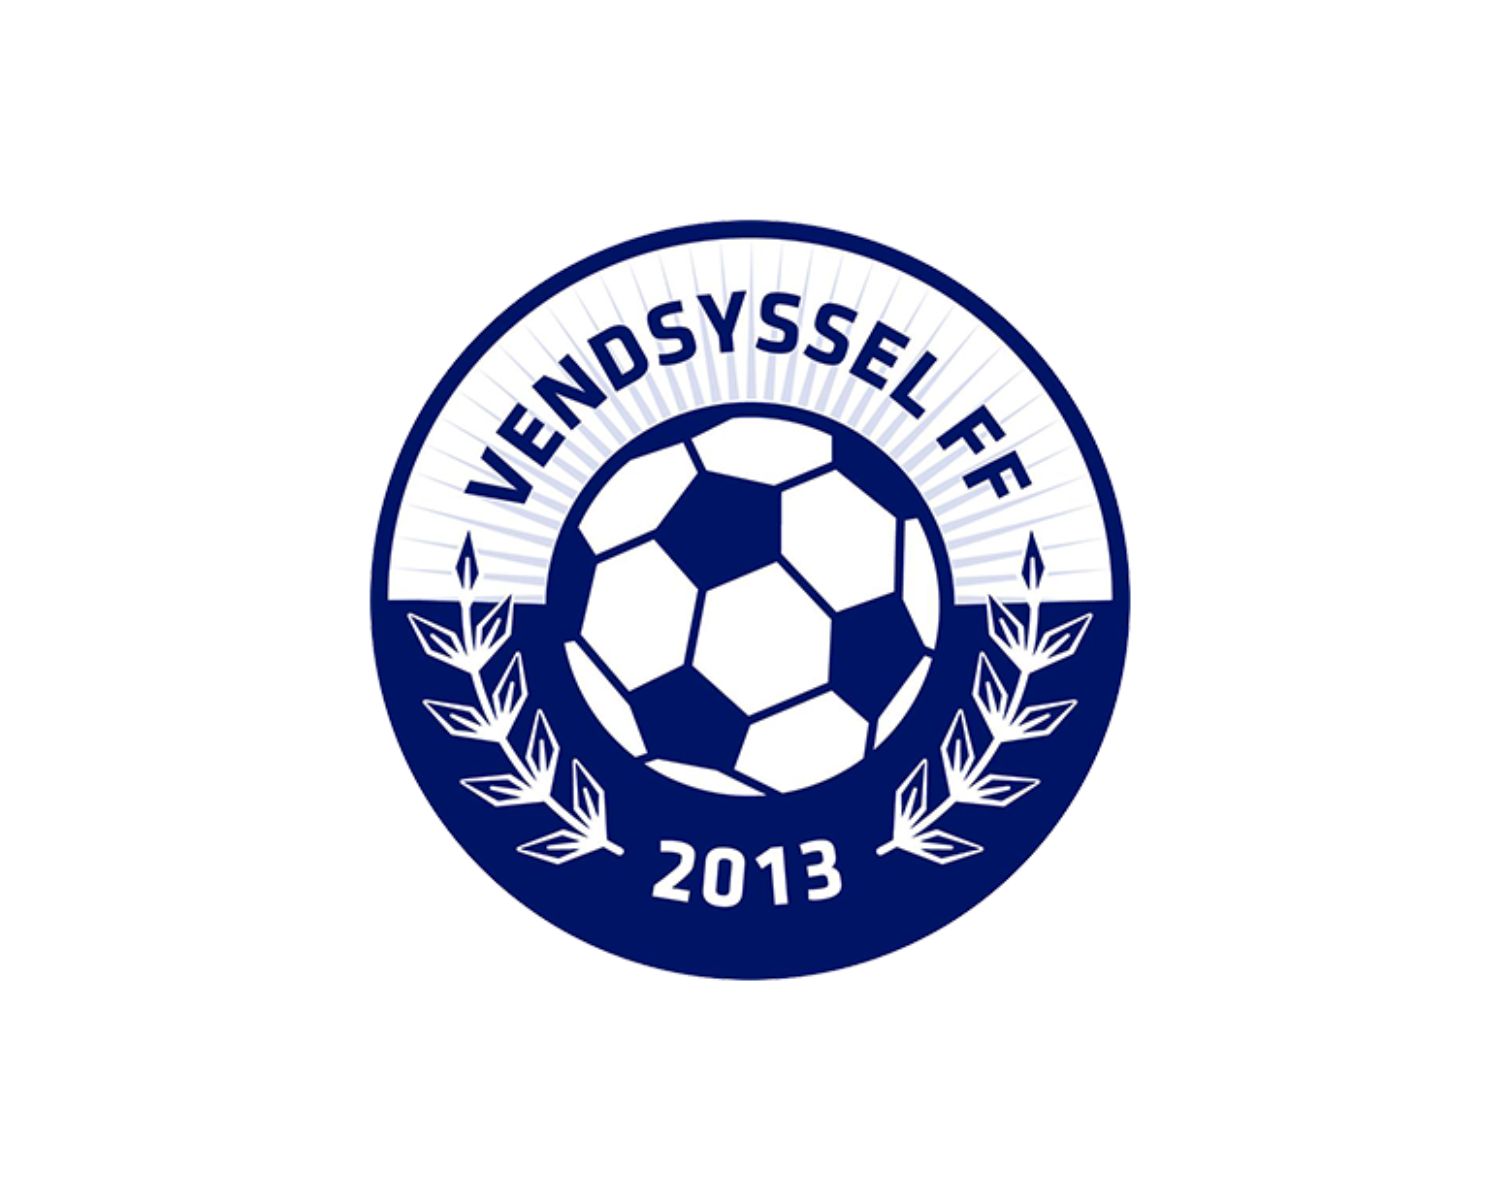 vendsyssel-ff-17-football-club-facts